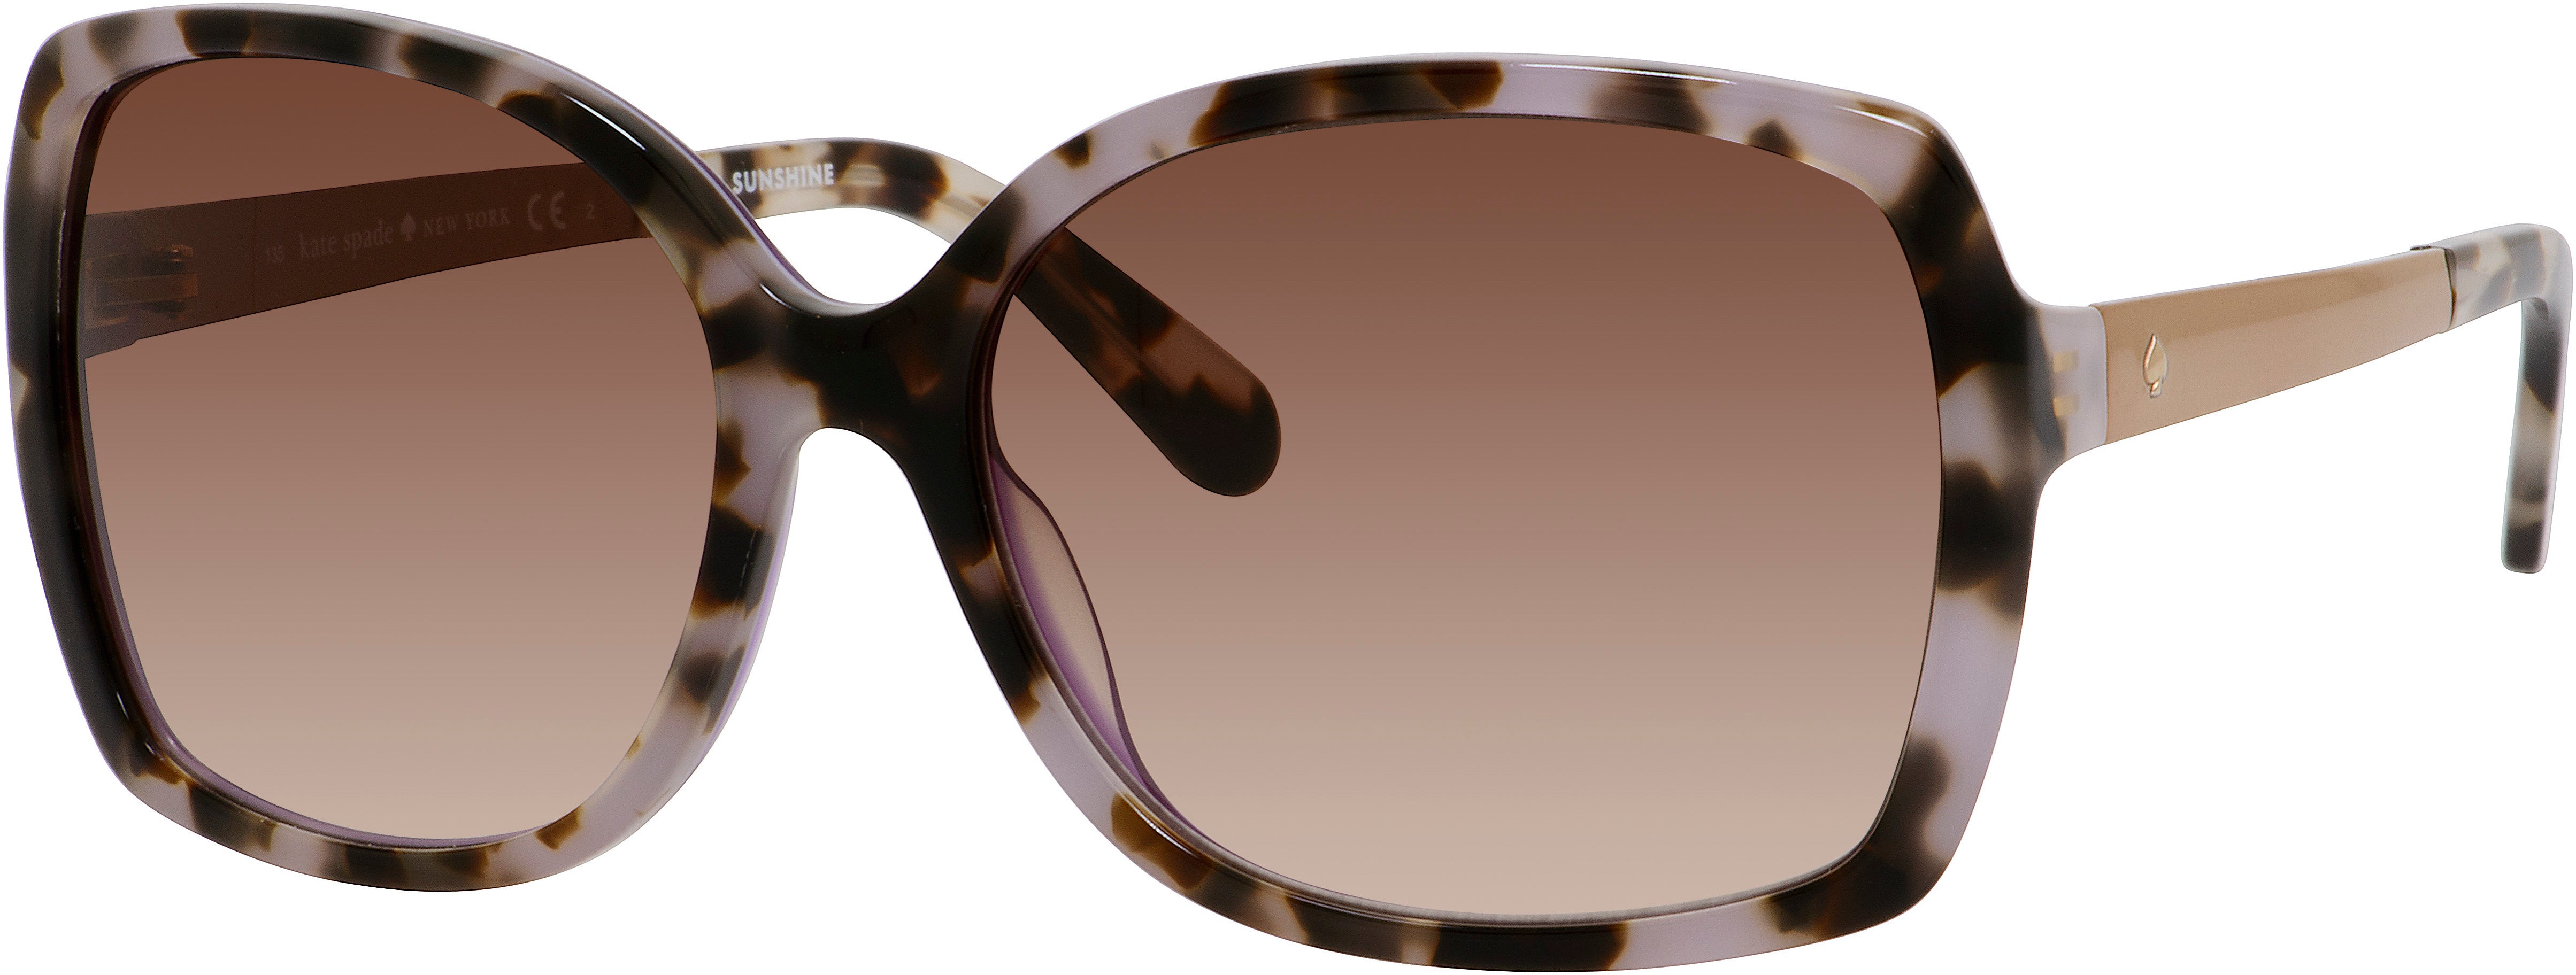 Kate Spade Darilynn/S Rectangular Sunglasses 0W05-0W05  Tortoise Lavender (B1 Warm Brown Gradient)